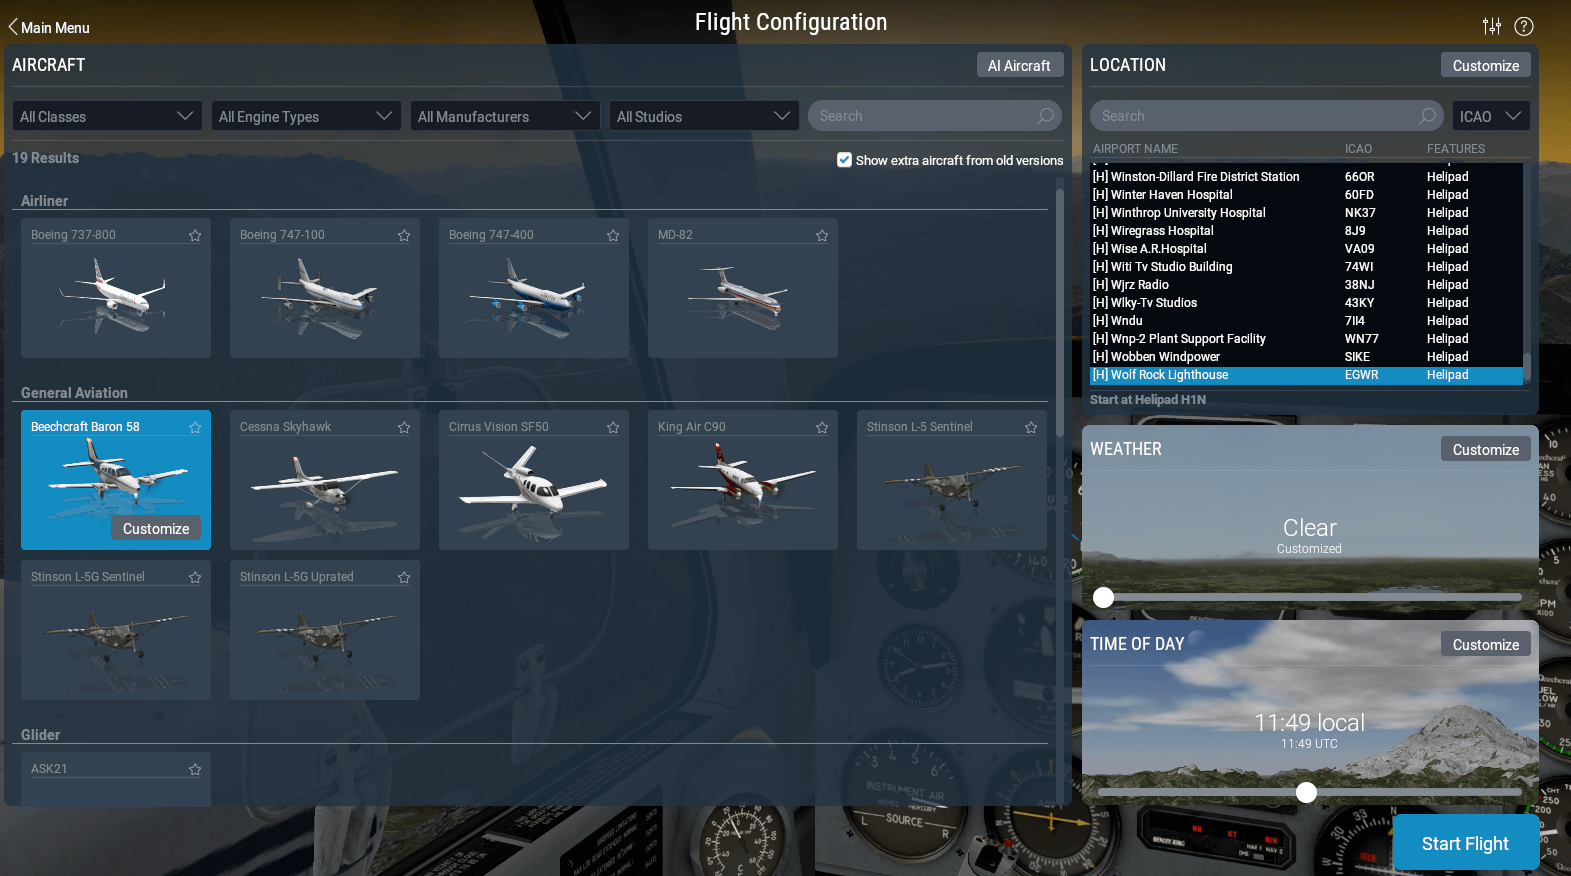 X-Plane 11 Flight Simulator Software (Digital Download) – Flight